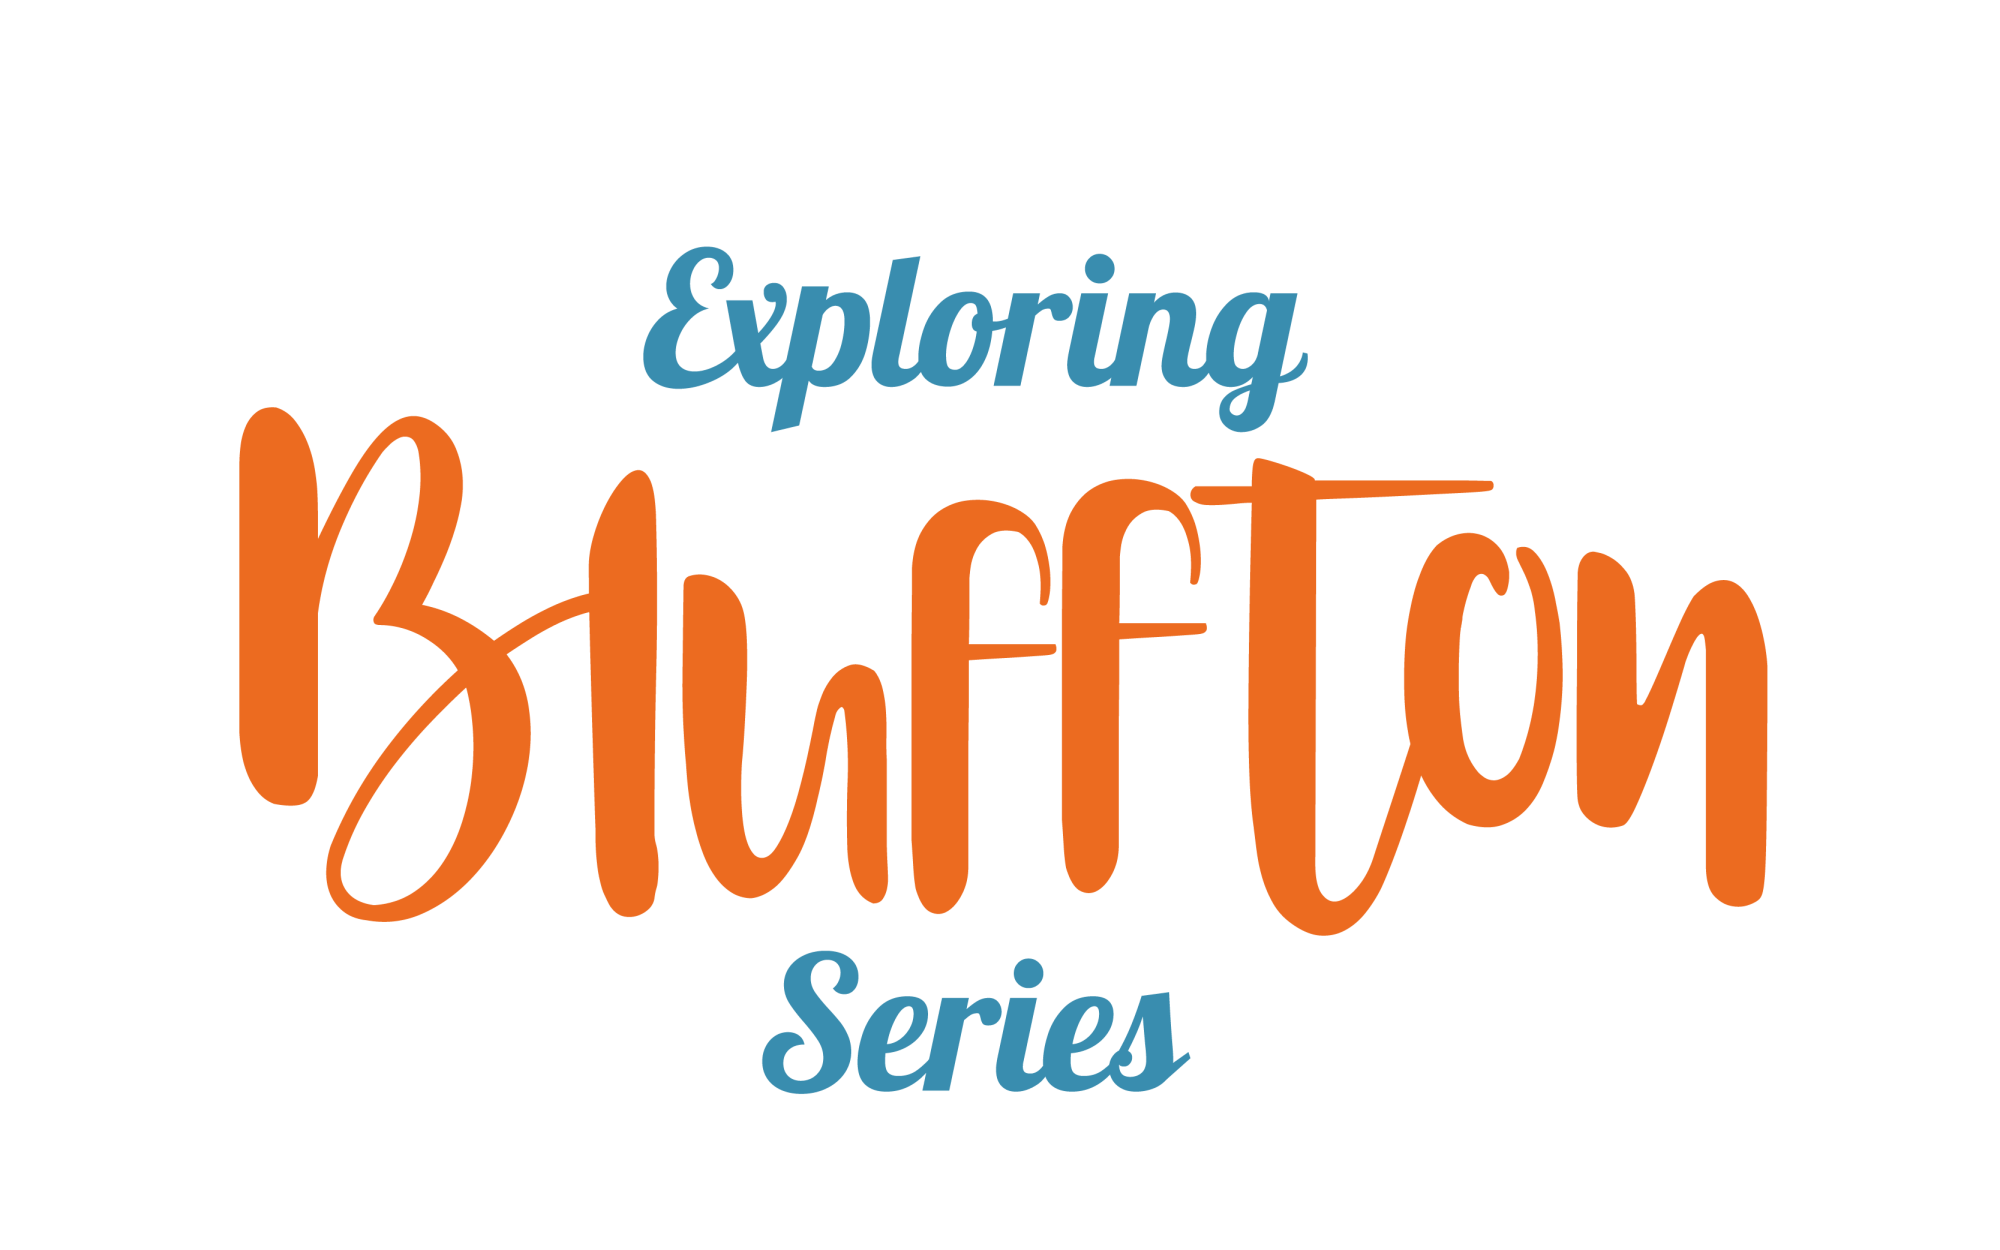 Exploring Bluffton Series